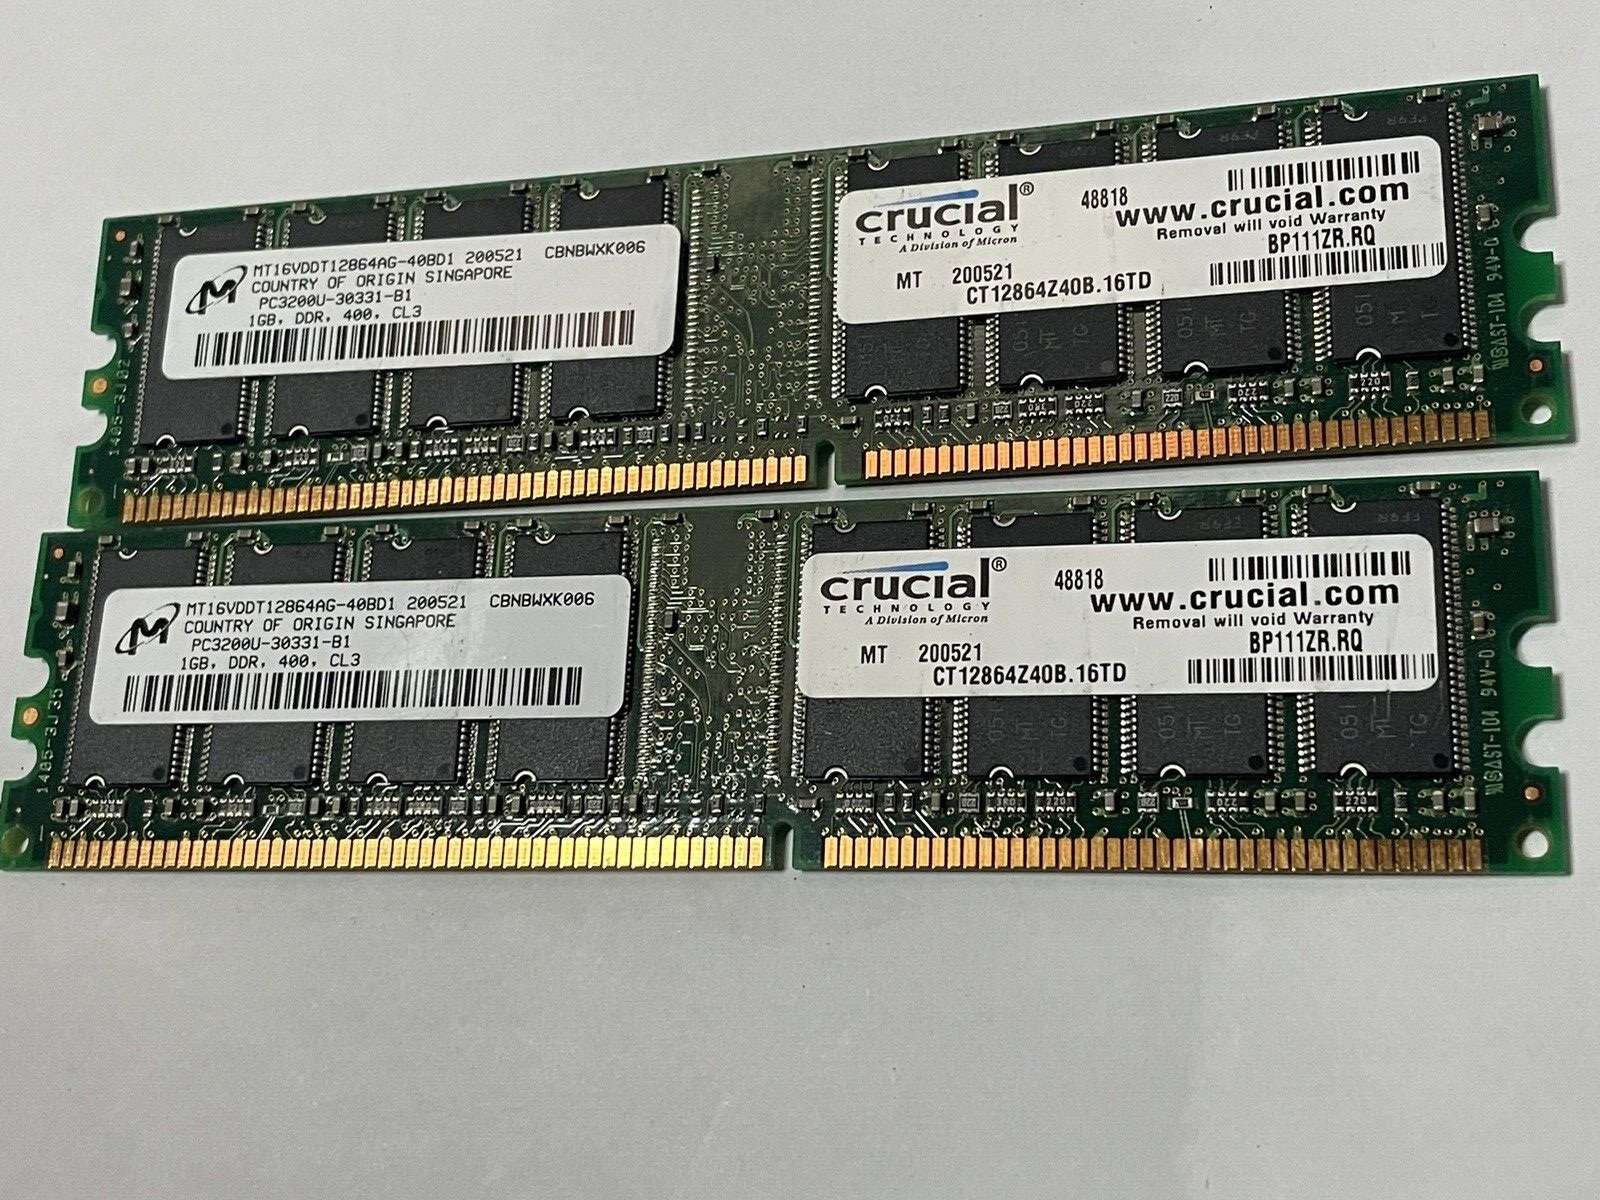 Lot of 2 Crucial CT12864Z40B 1GB DDR PC-3200U Desktop RAM Memory